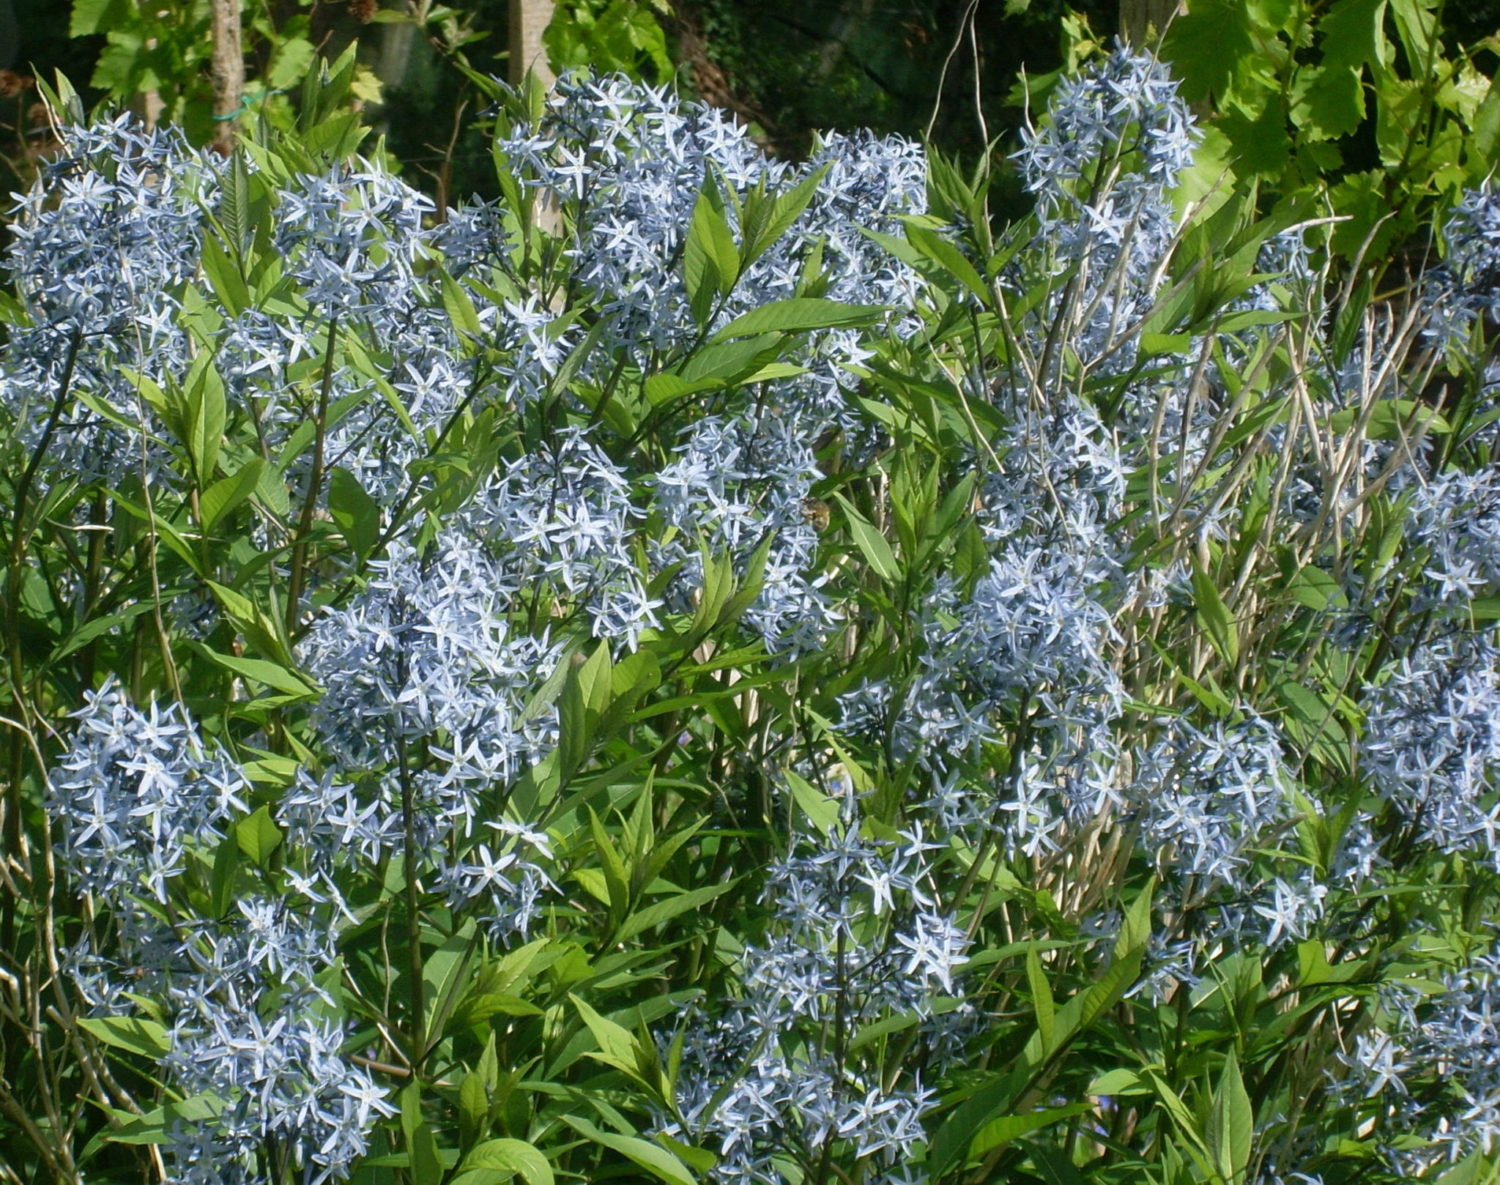 Amsonia fleurs bleues